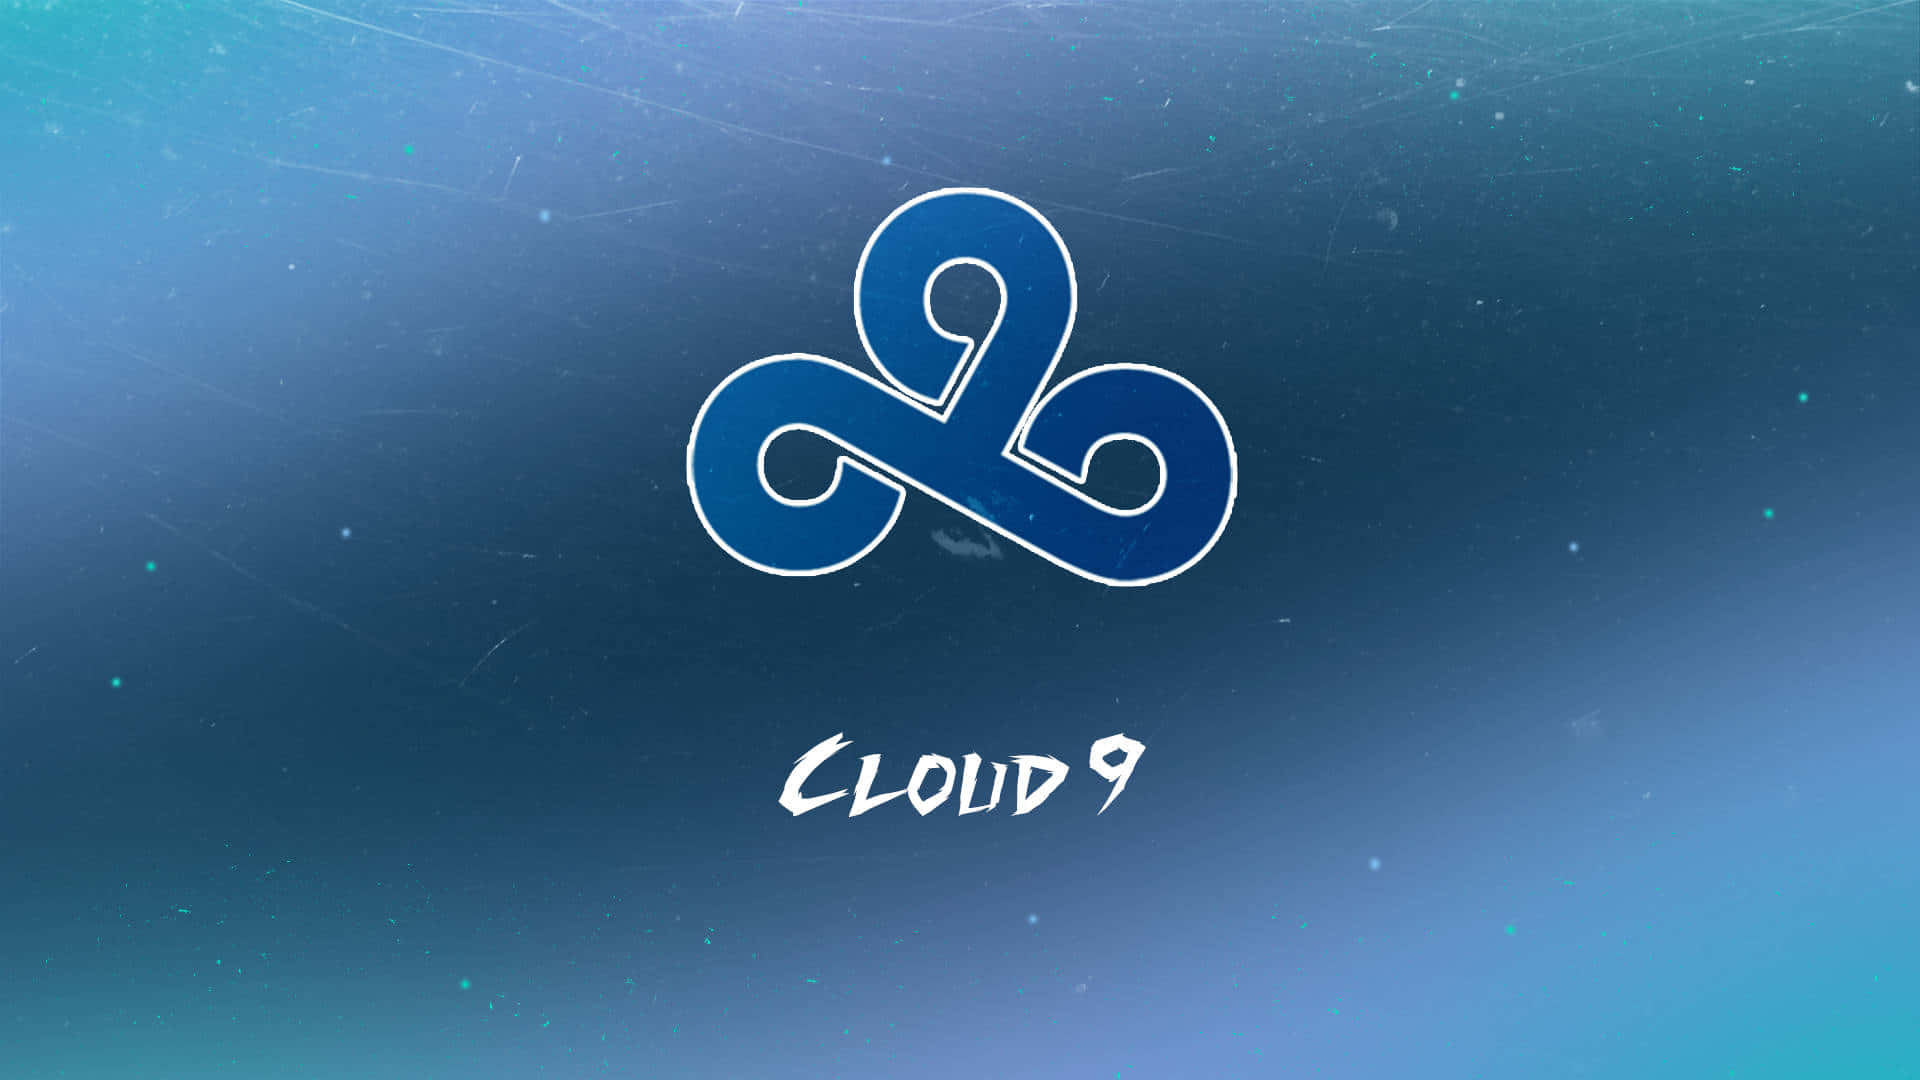 Cloud 9 Logo On A Blue Background Wallpaper